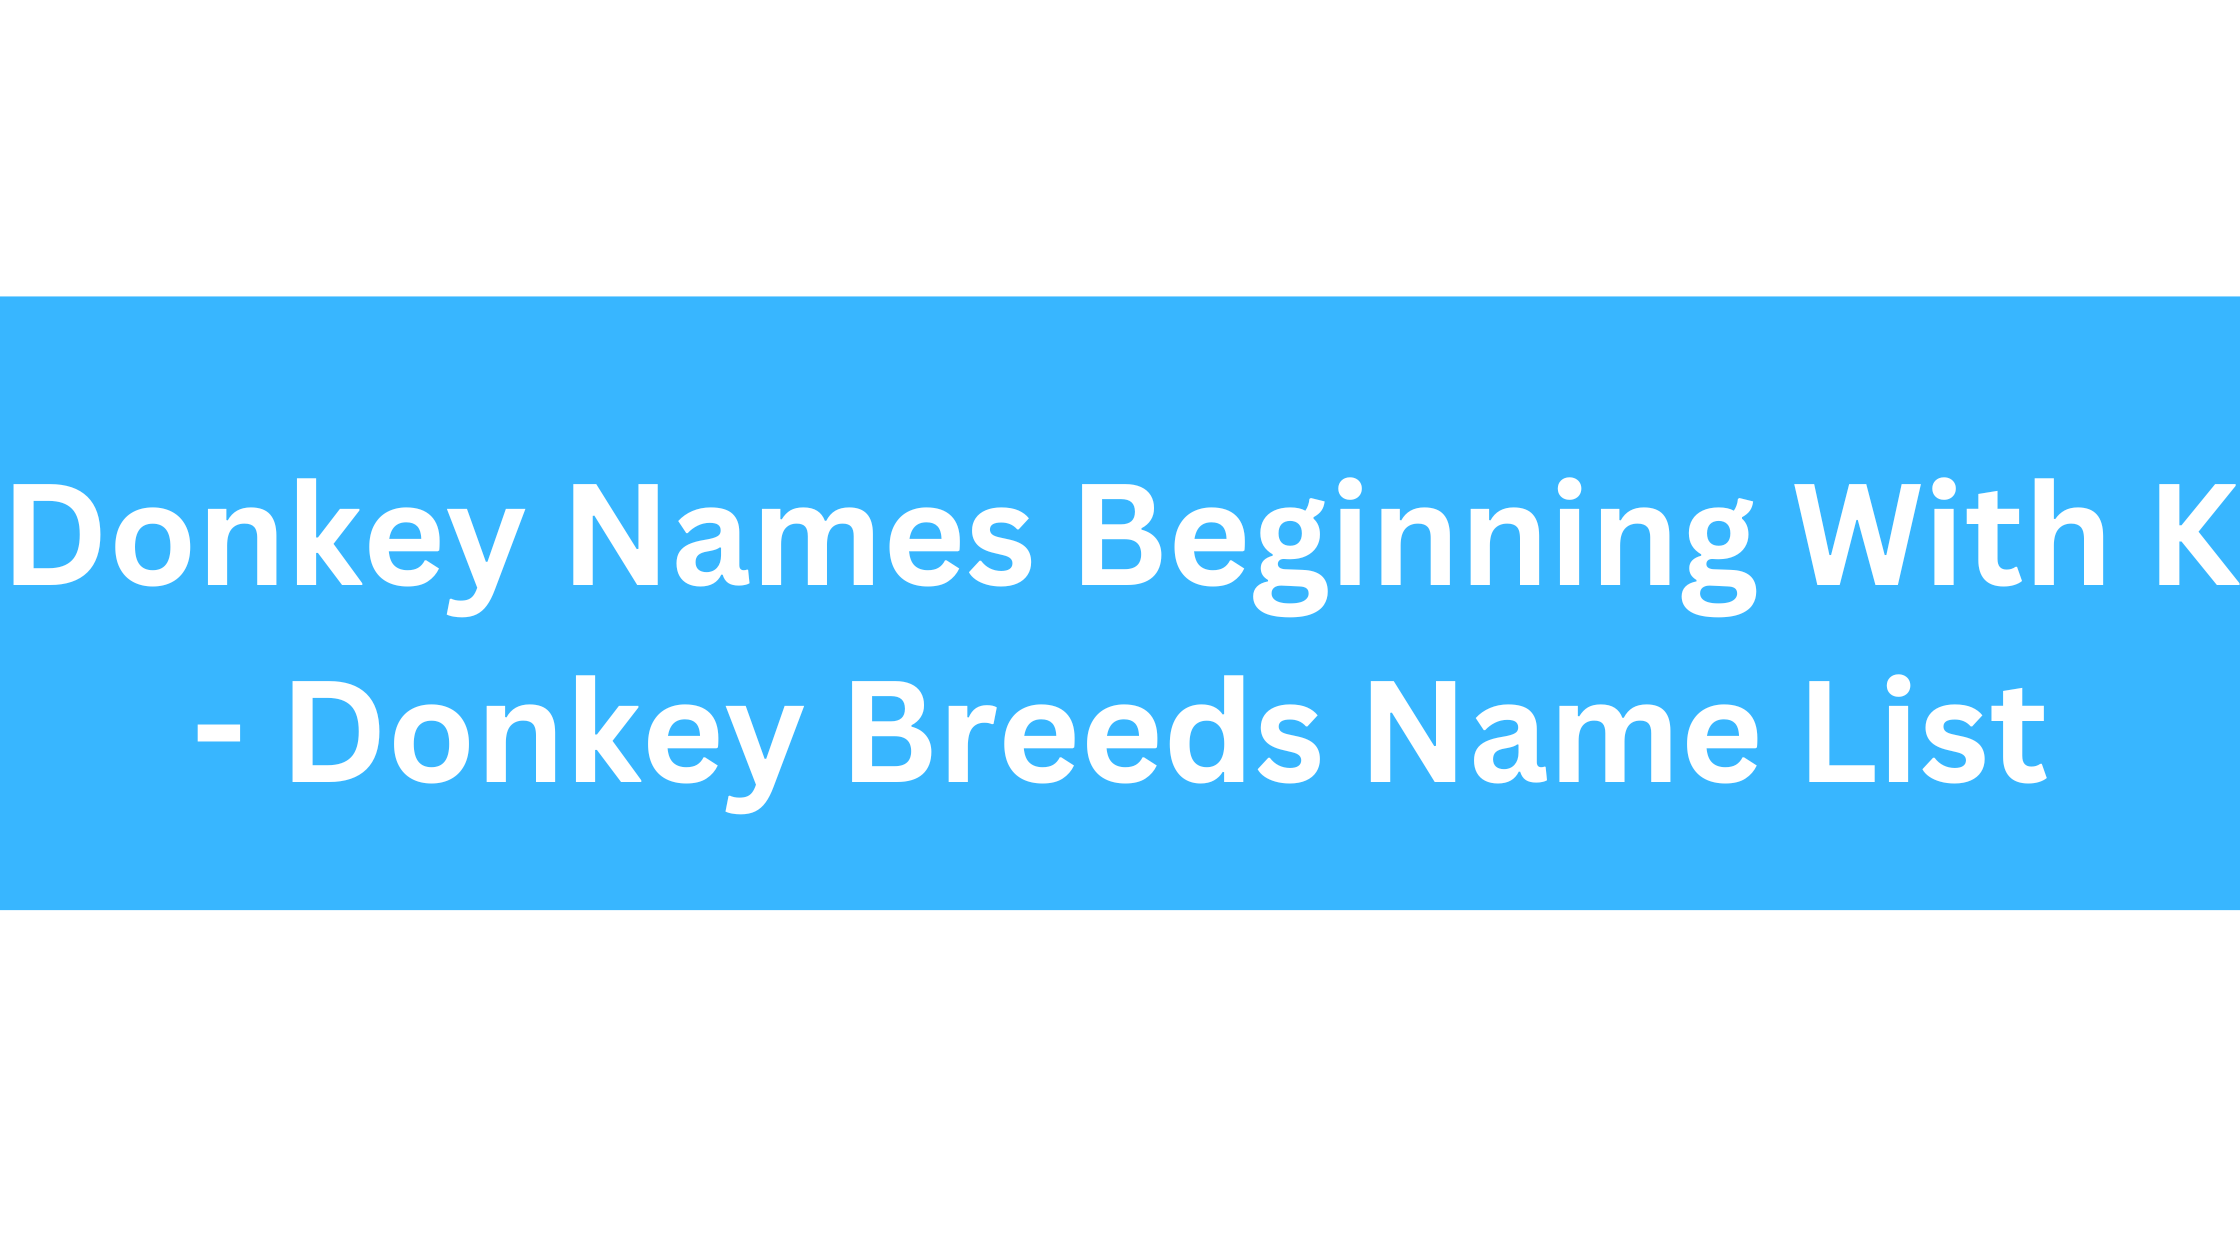 Donkey Names Beginning With K